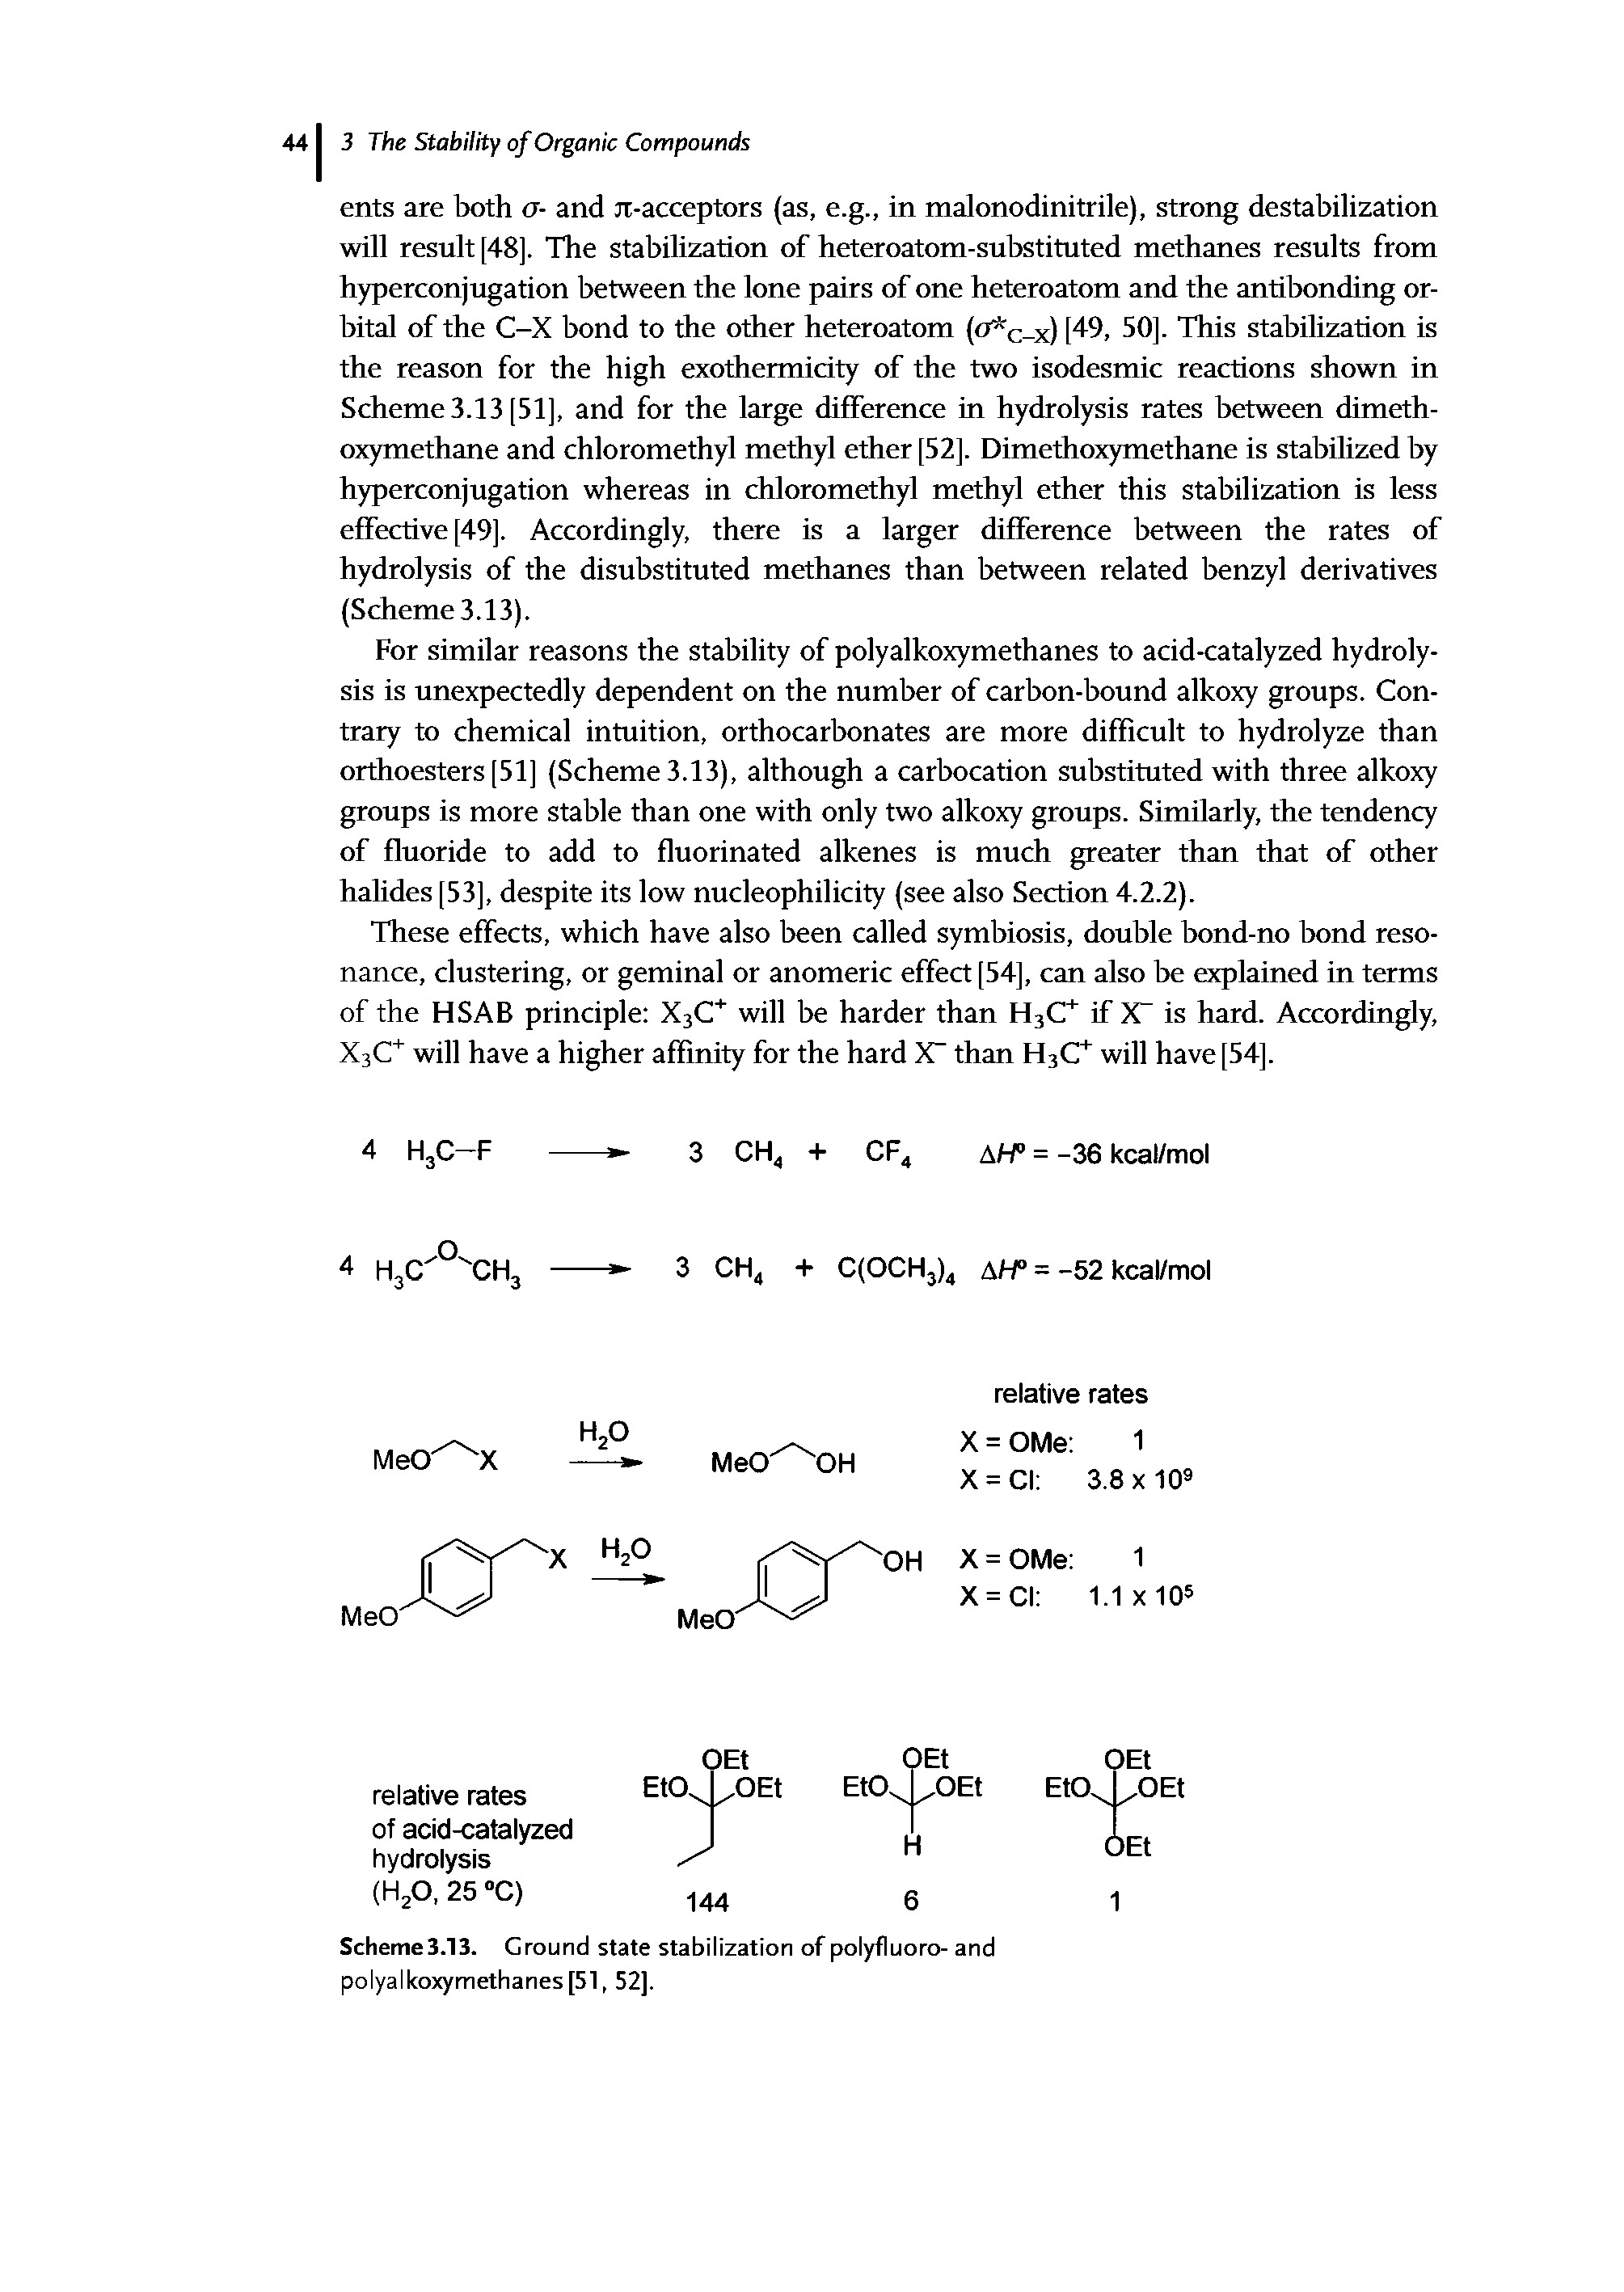 Scheme3.13. Ground state stabilization of polyfluoro- and polyalkoxymethanes[51,52].